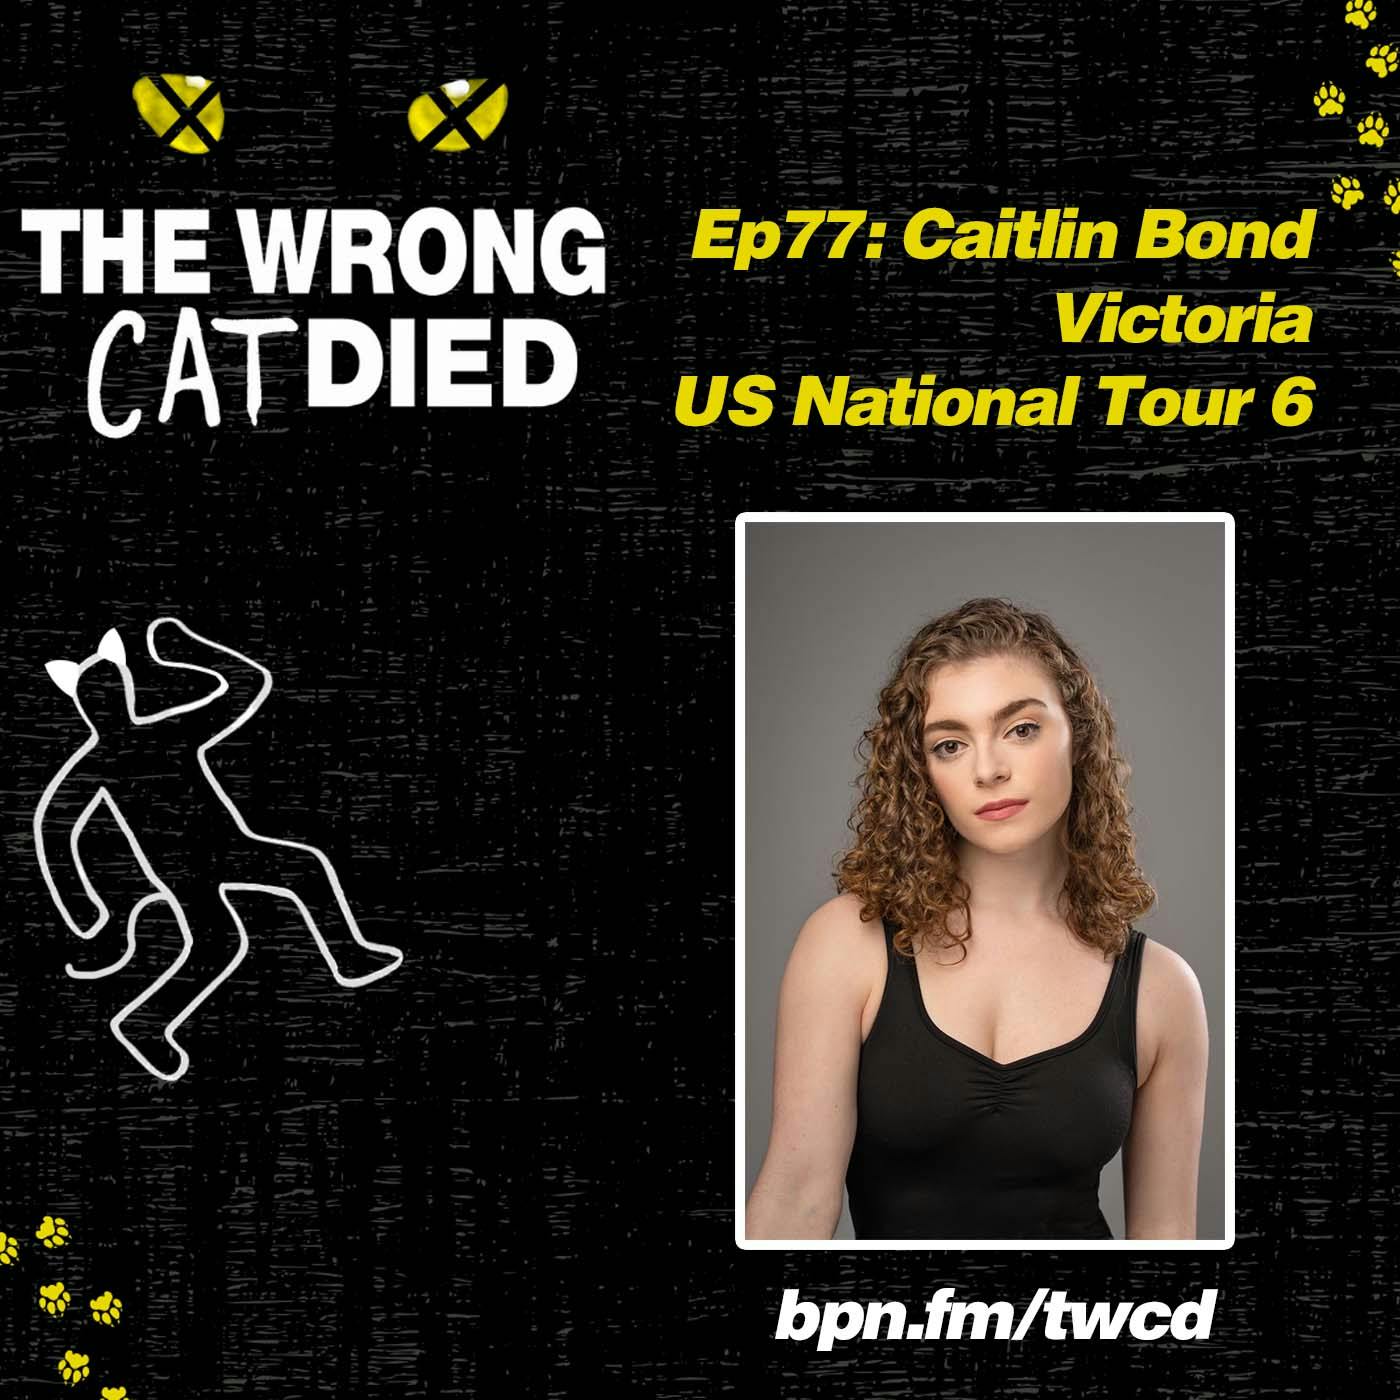 Ep77 - Caitlin Bond, Victoria US on National Tour 6